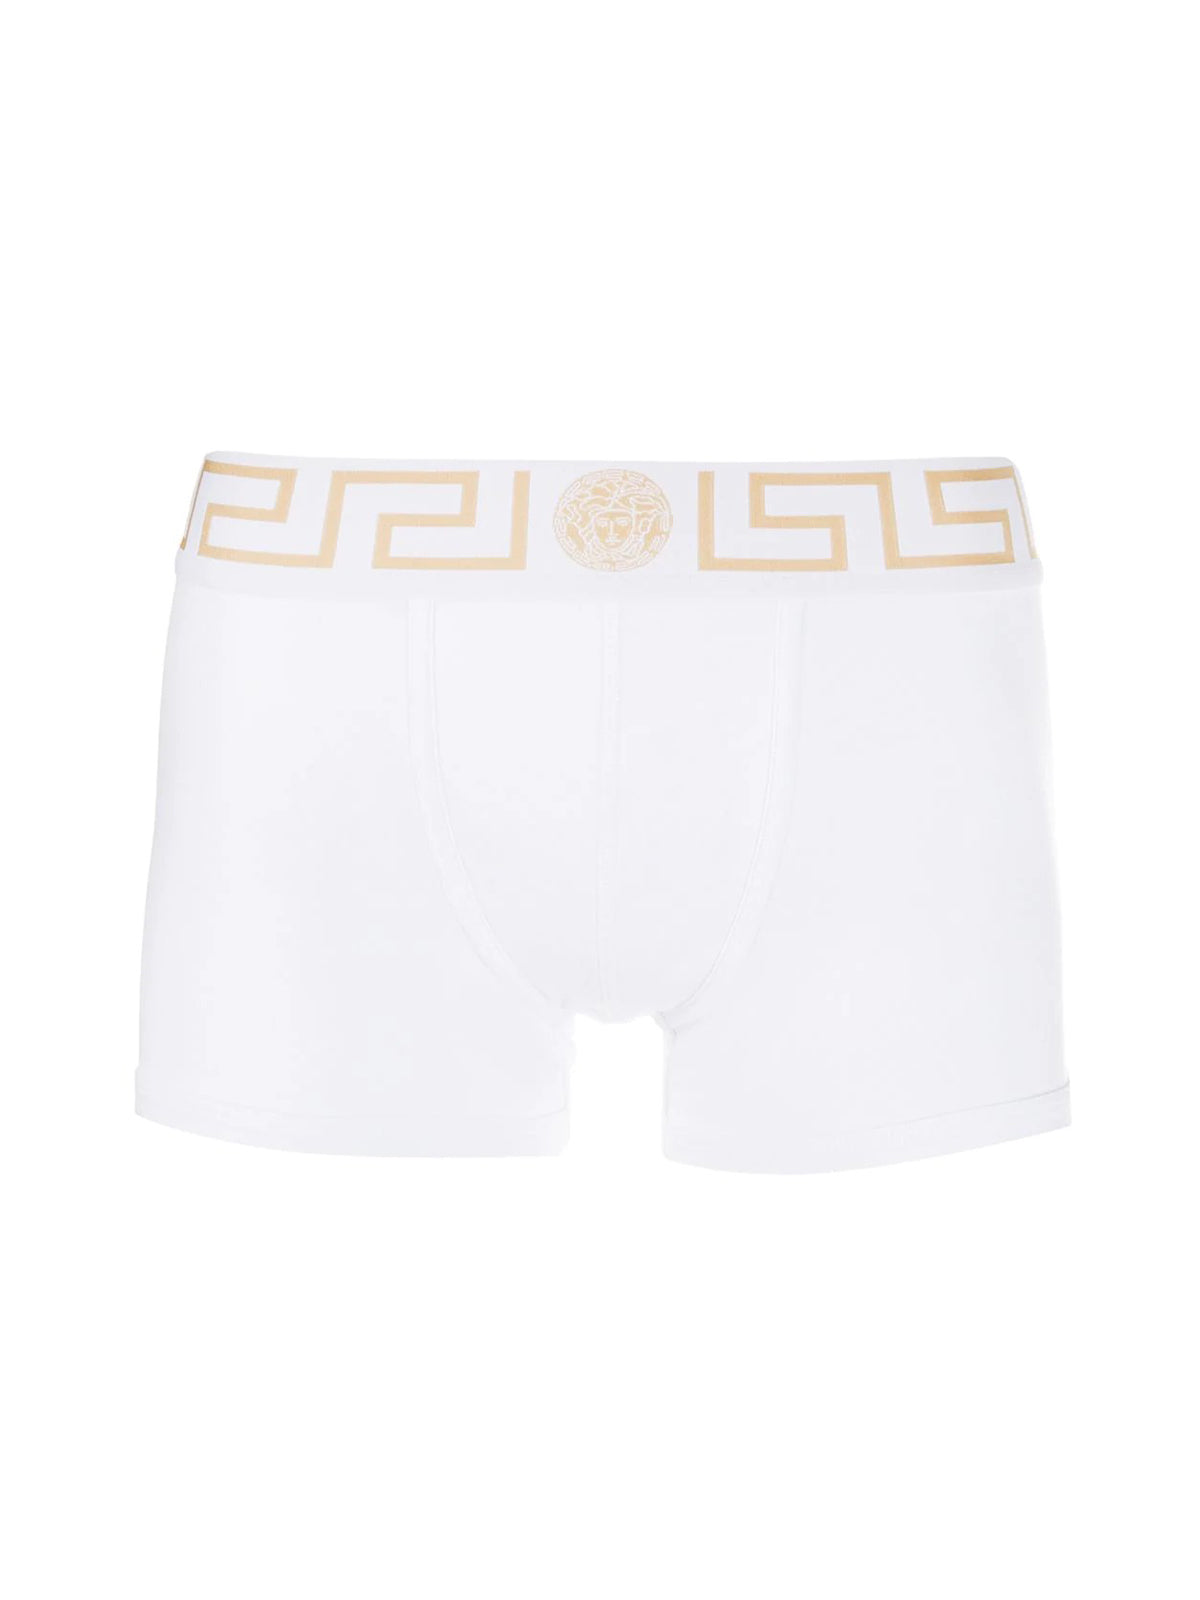 Medusa Greek Key waistband boxer shorts